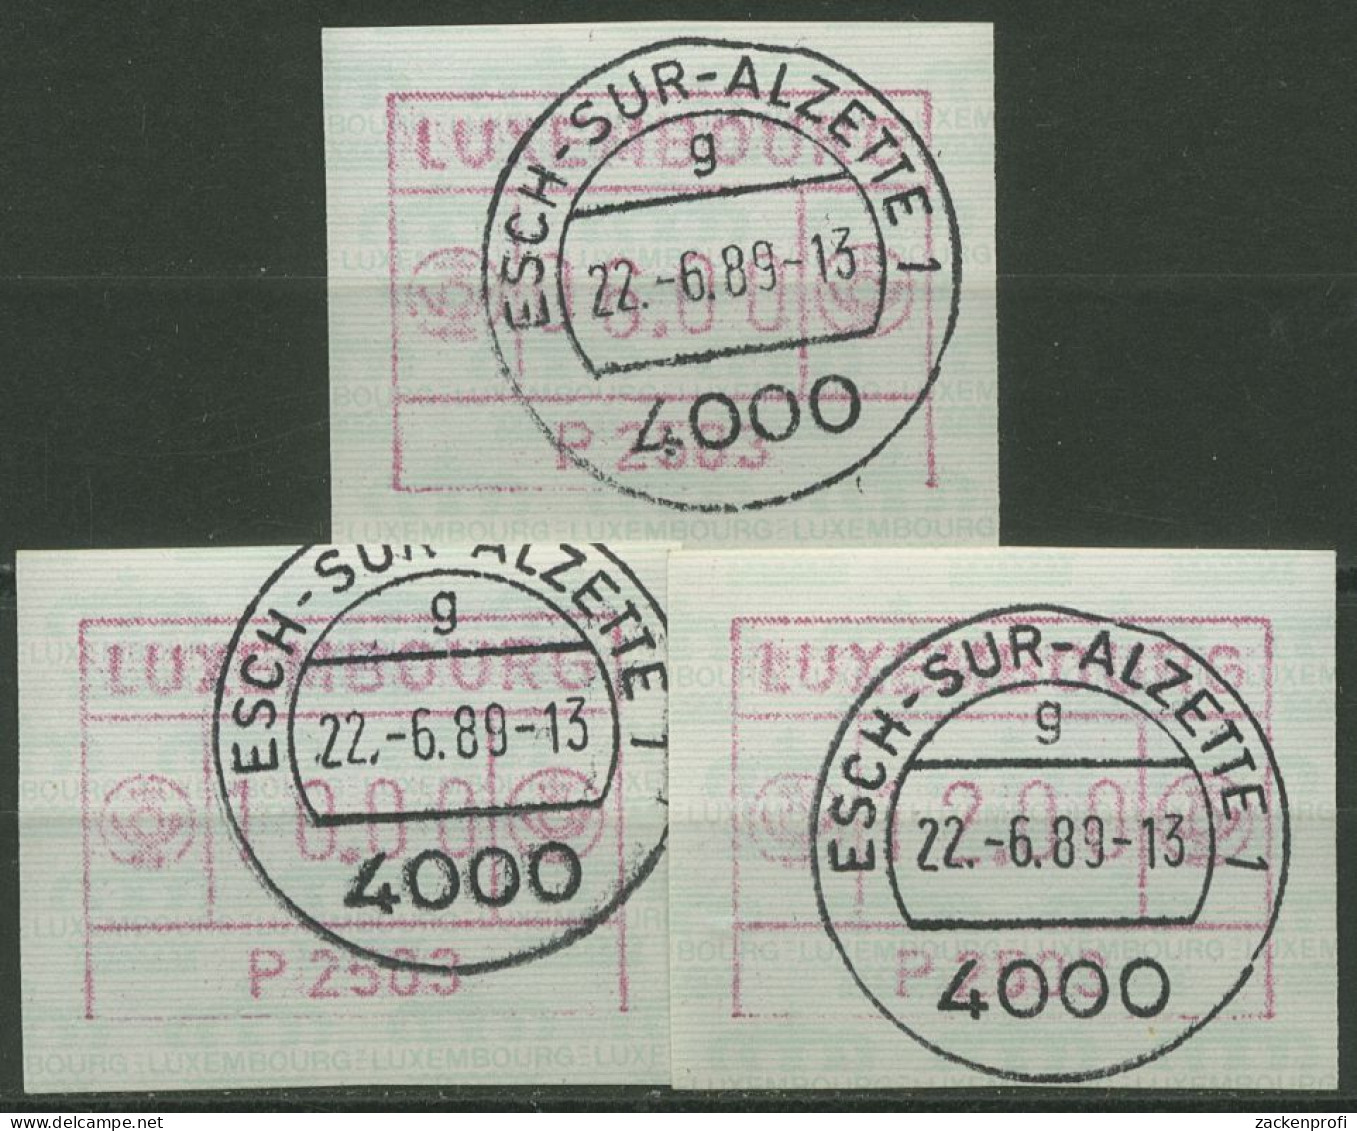 Luxemburg 1983 Automatenmarke Automat P 2503 Satz 1.3 C S2 Gestempelt - Postage Labels